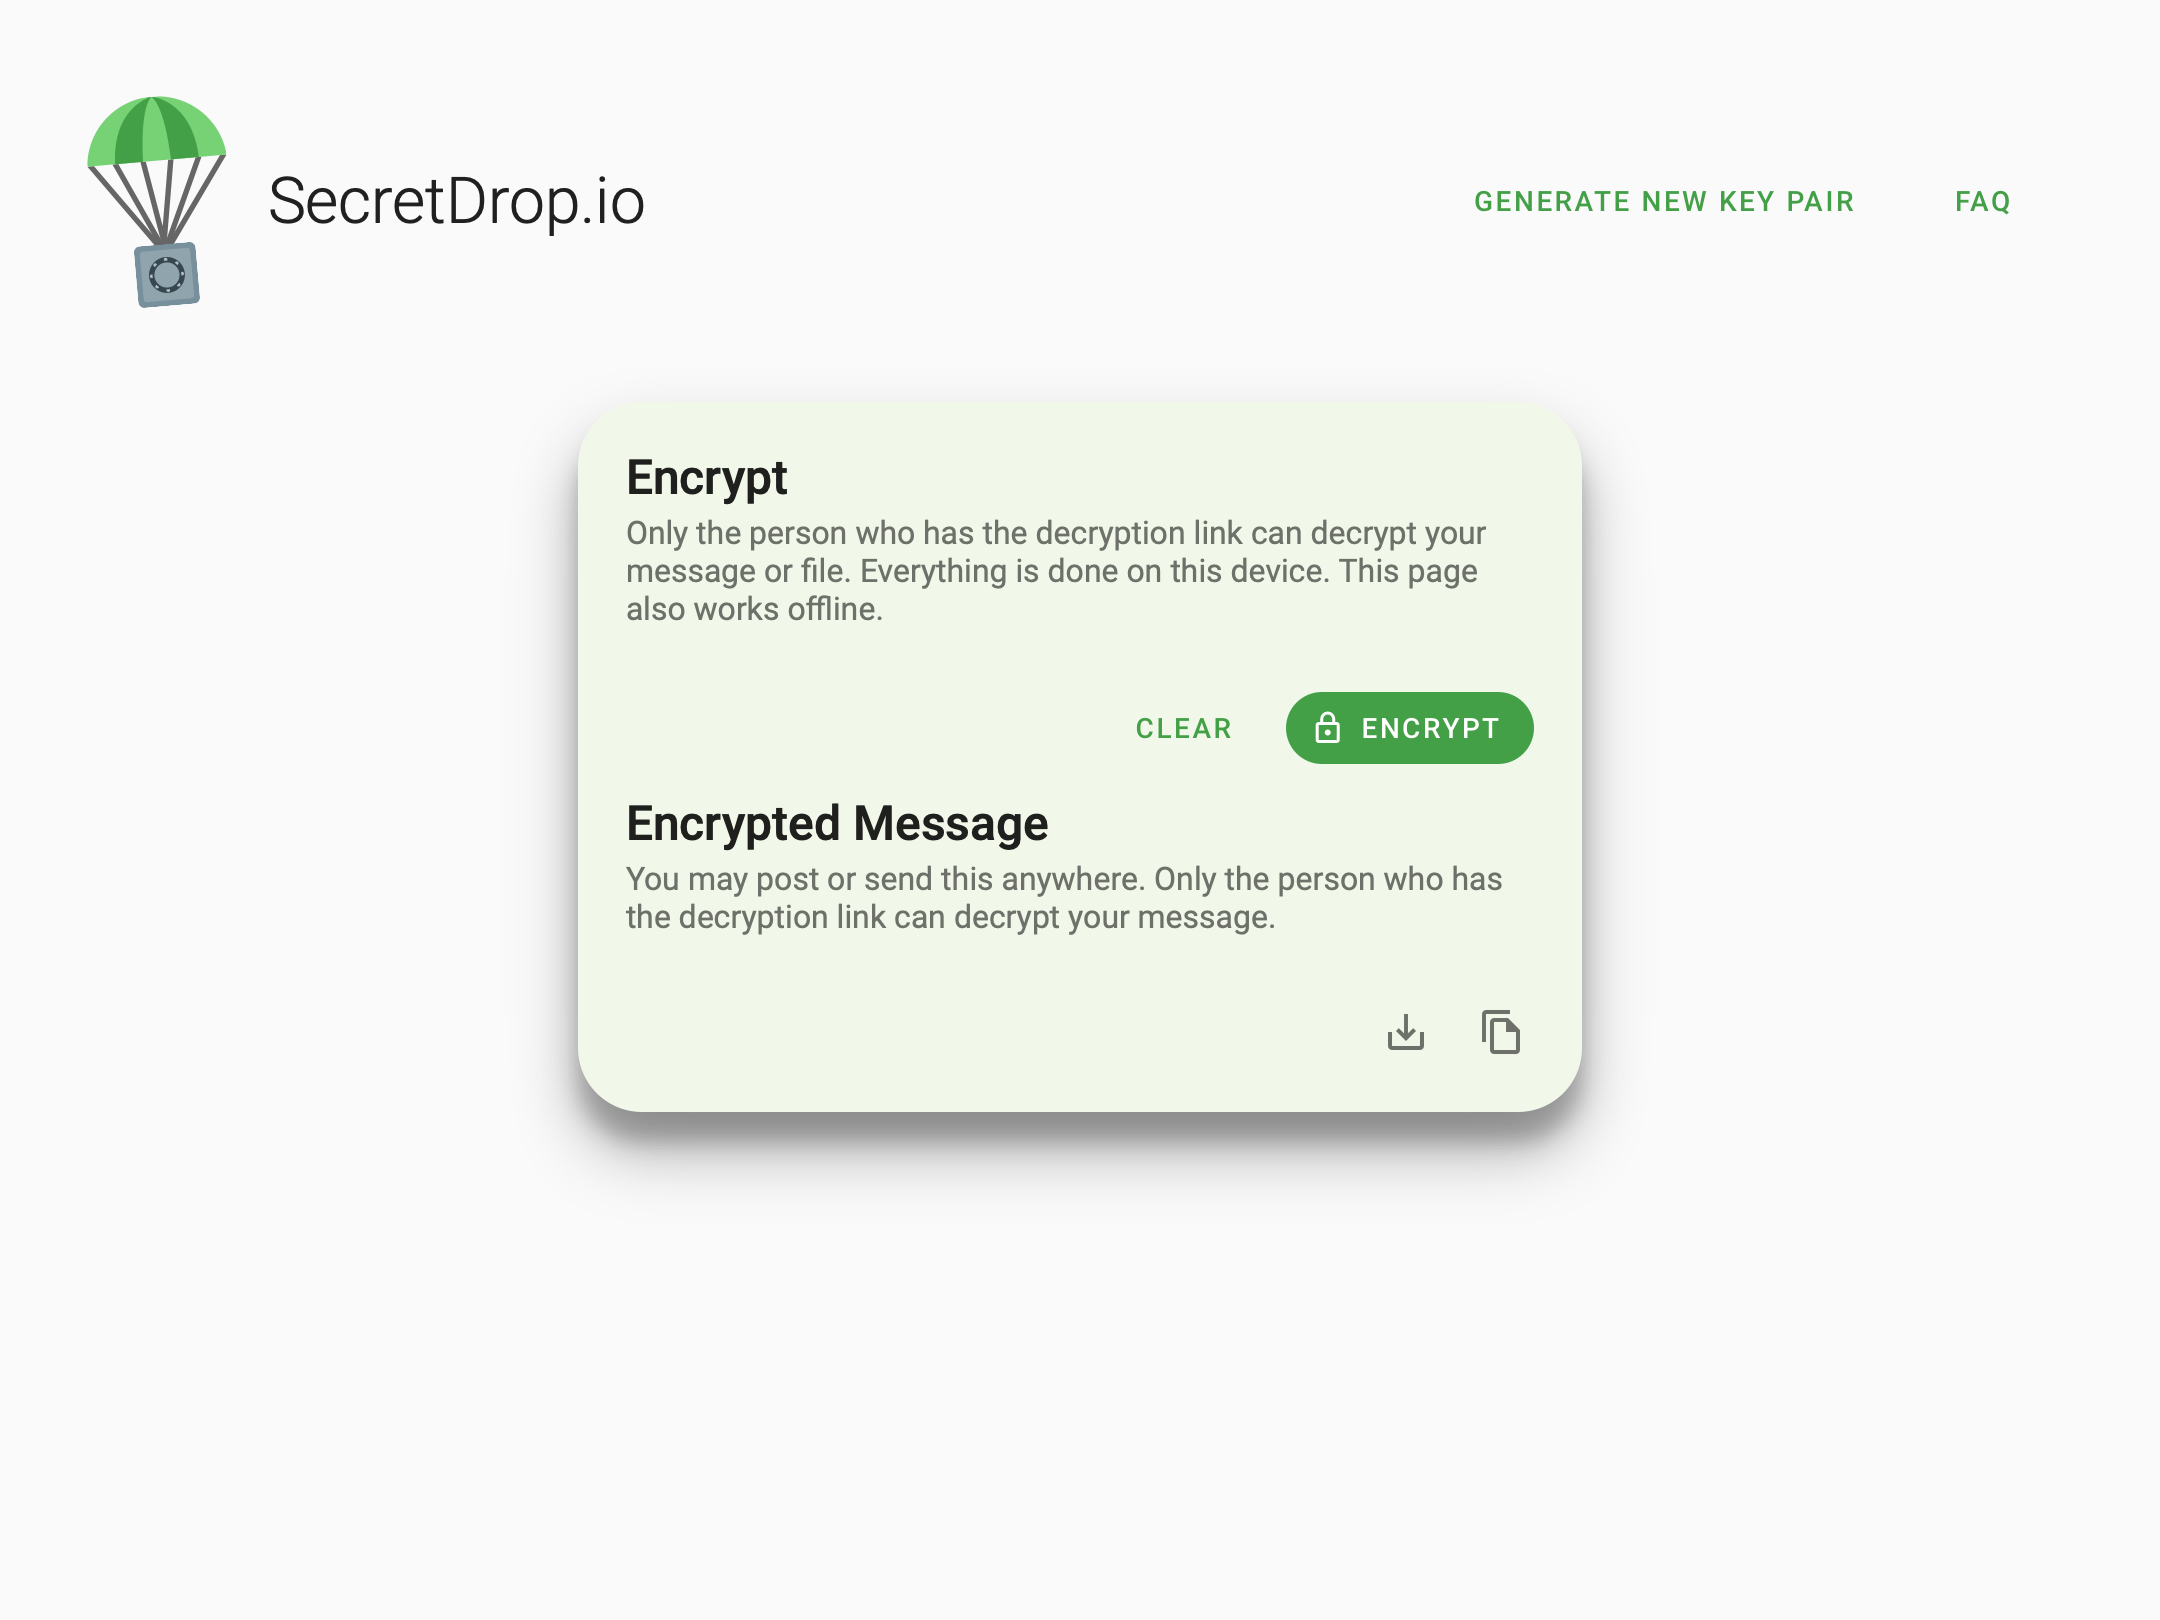 main-test-ts-encrypt-decrypt-encrypt-page-text-encryption-screenshot-1080-810-0-snap.png